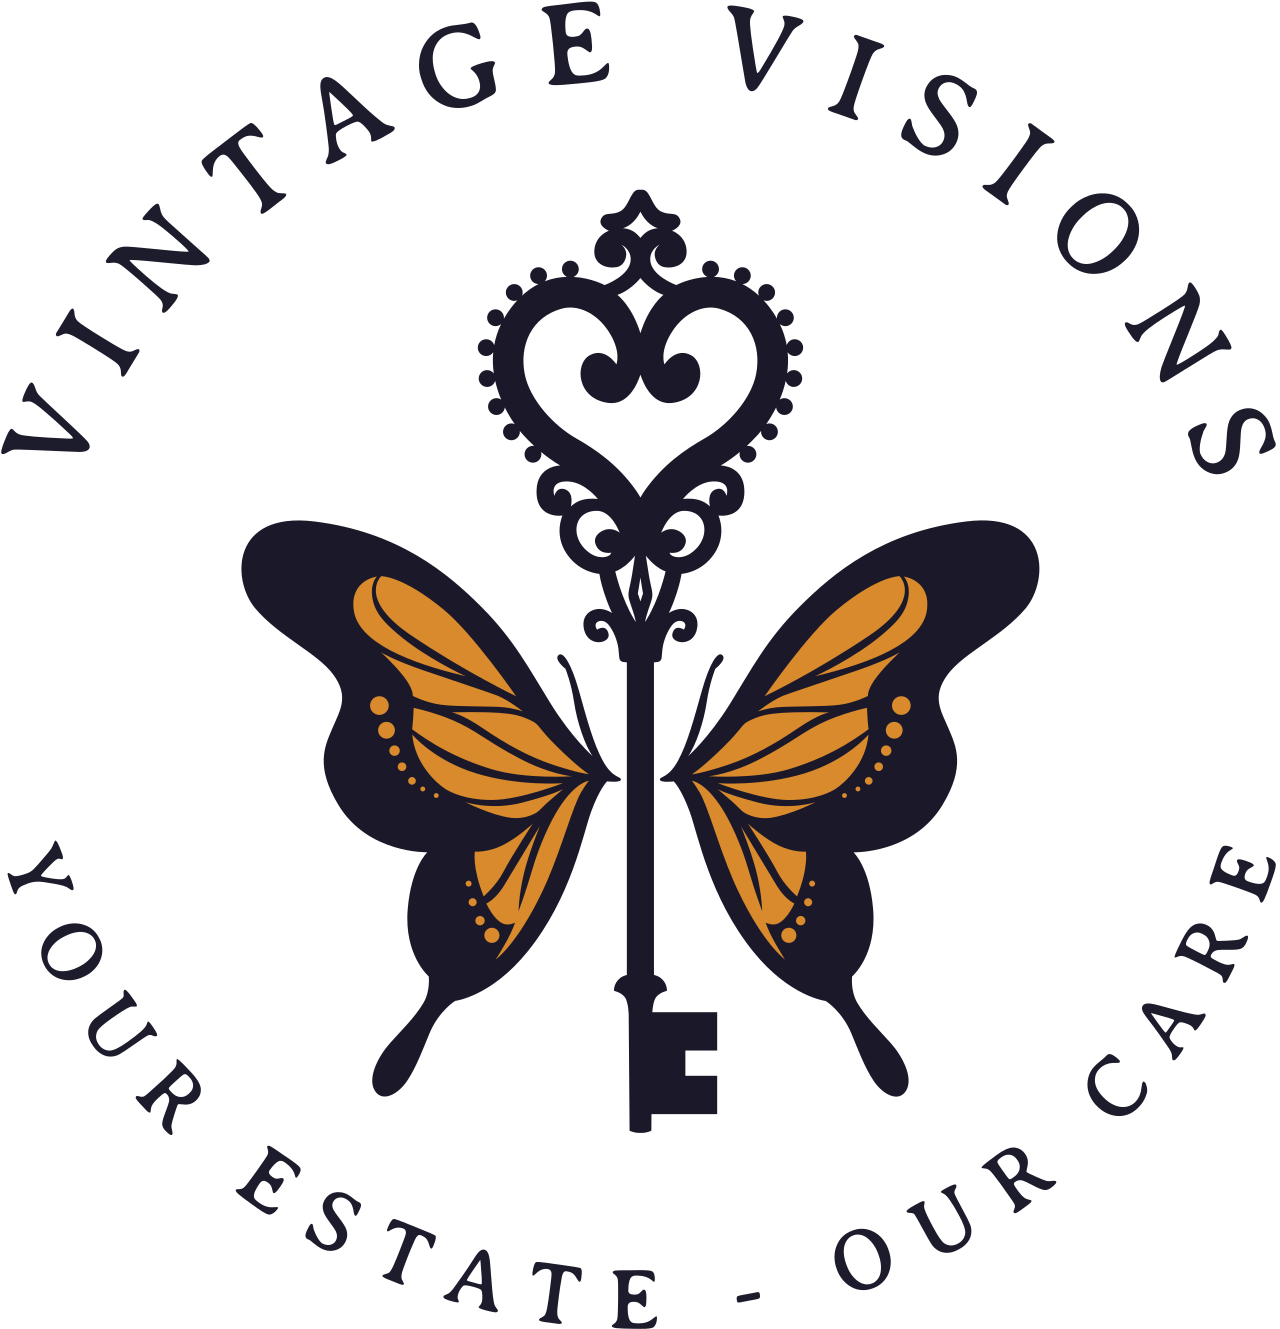 VINTAGE VISIONS's logo